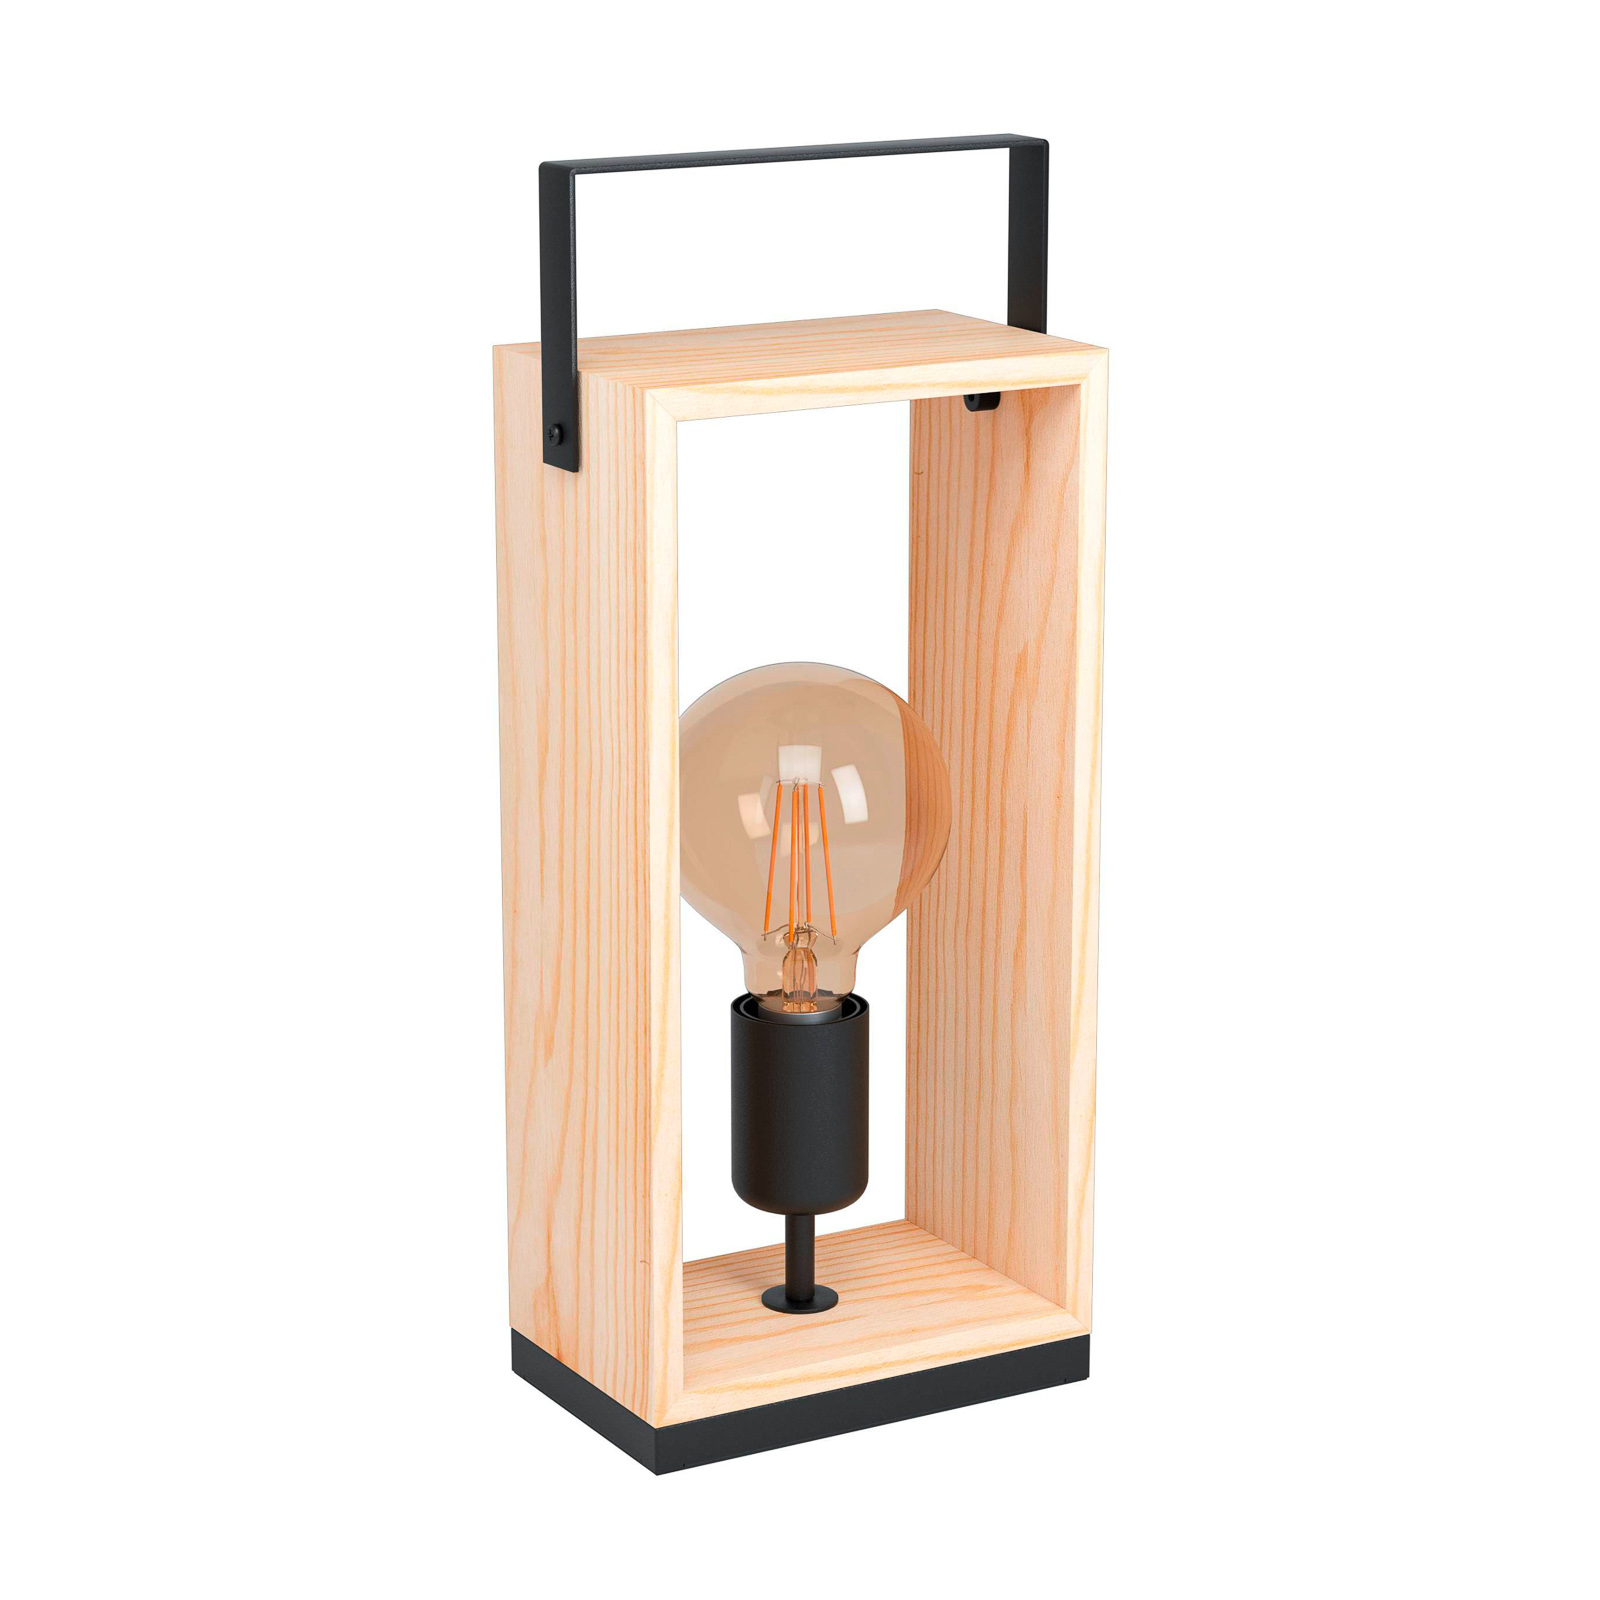 Tafellamp Famborough met licht houten frame